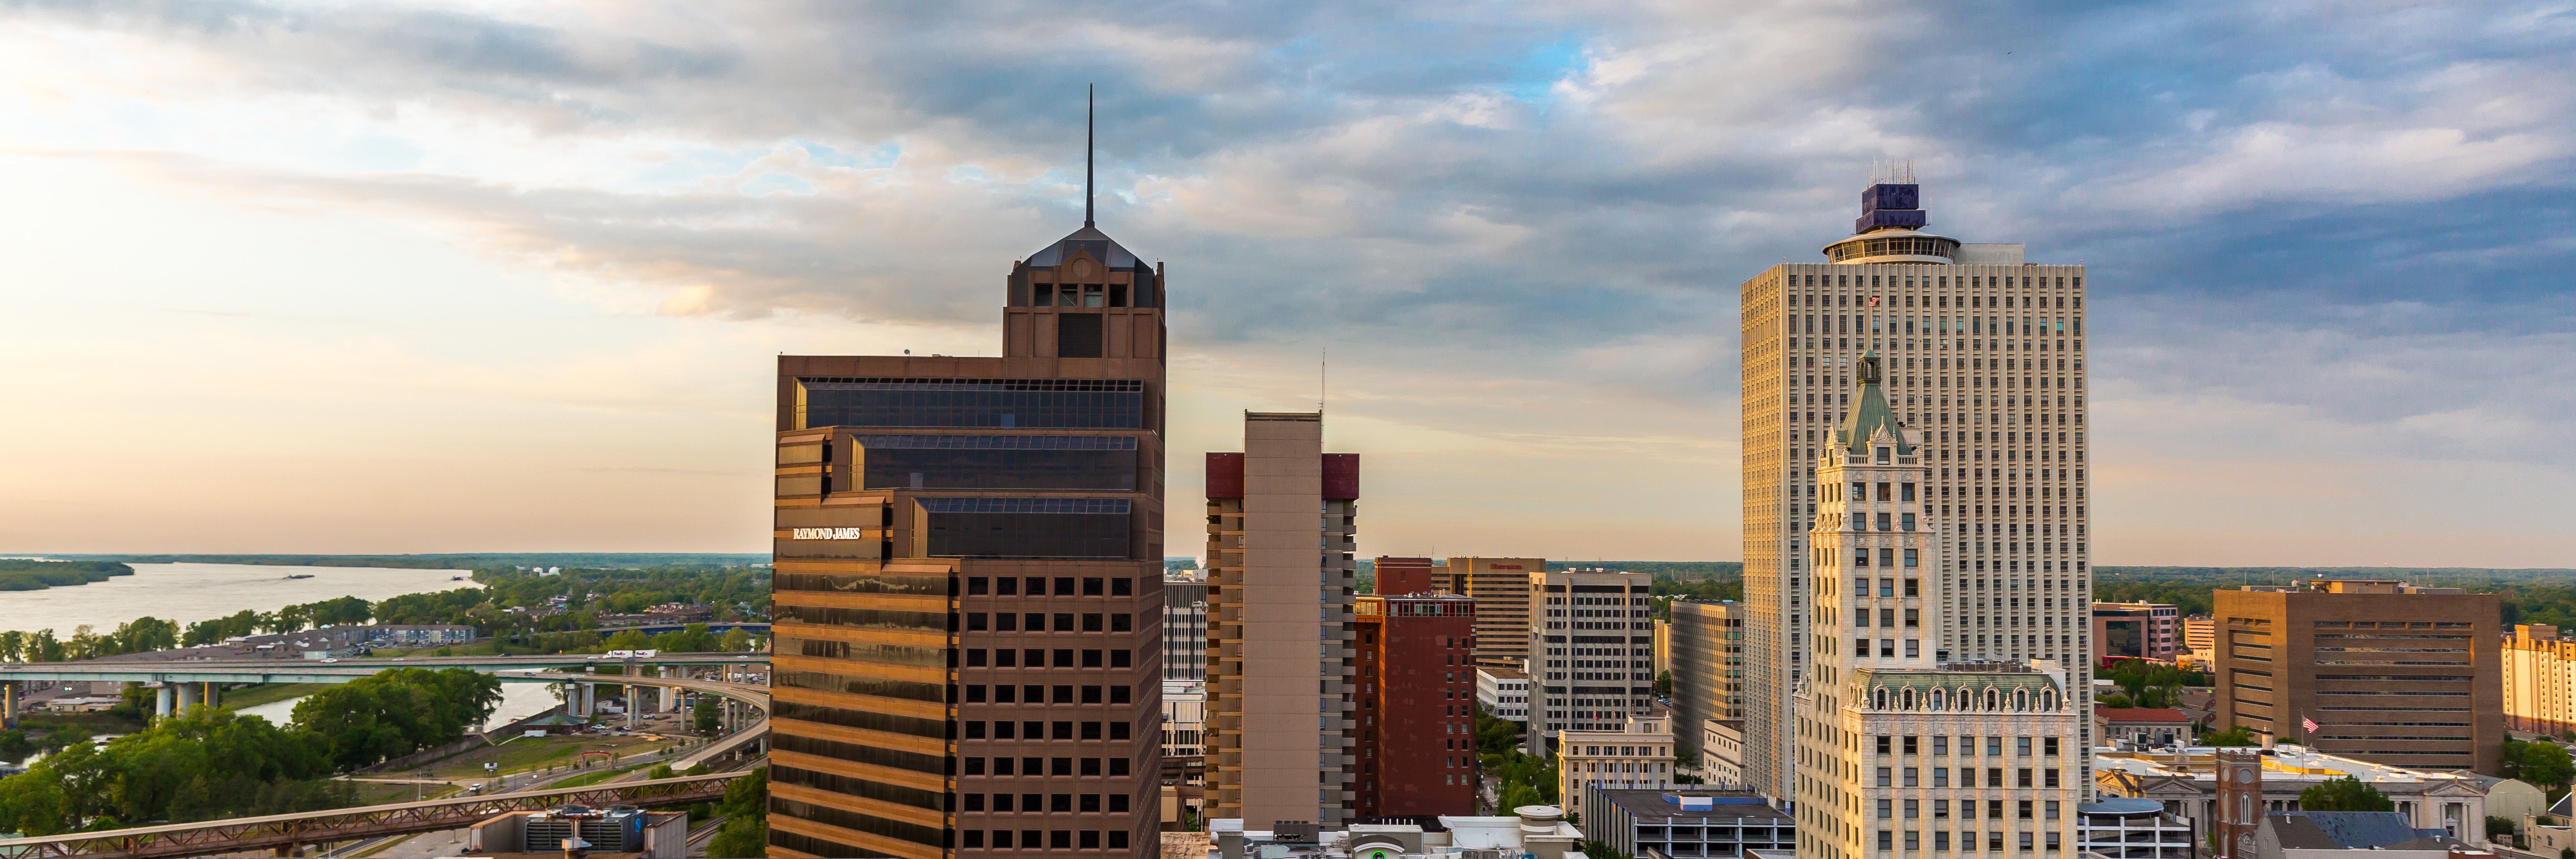 Downtown Memphis skyline